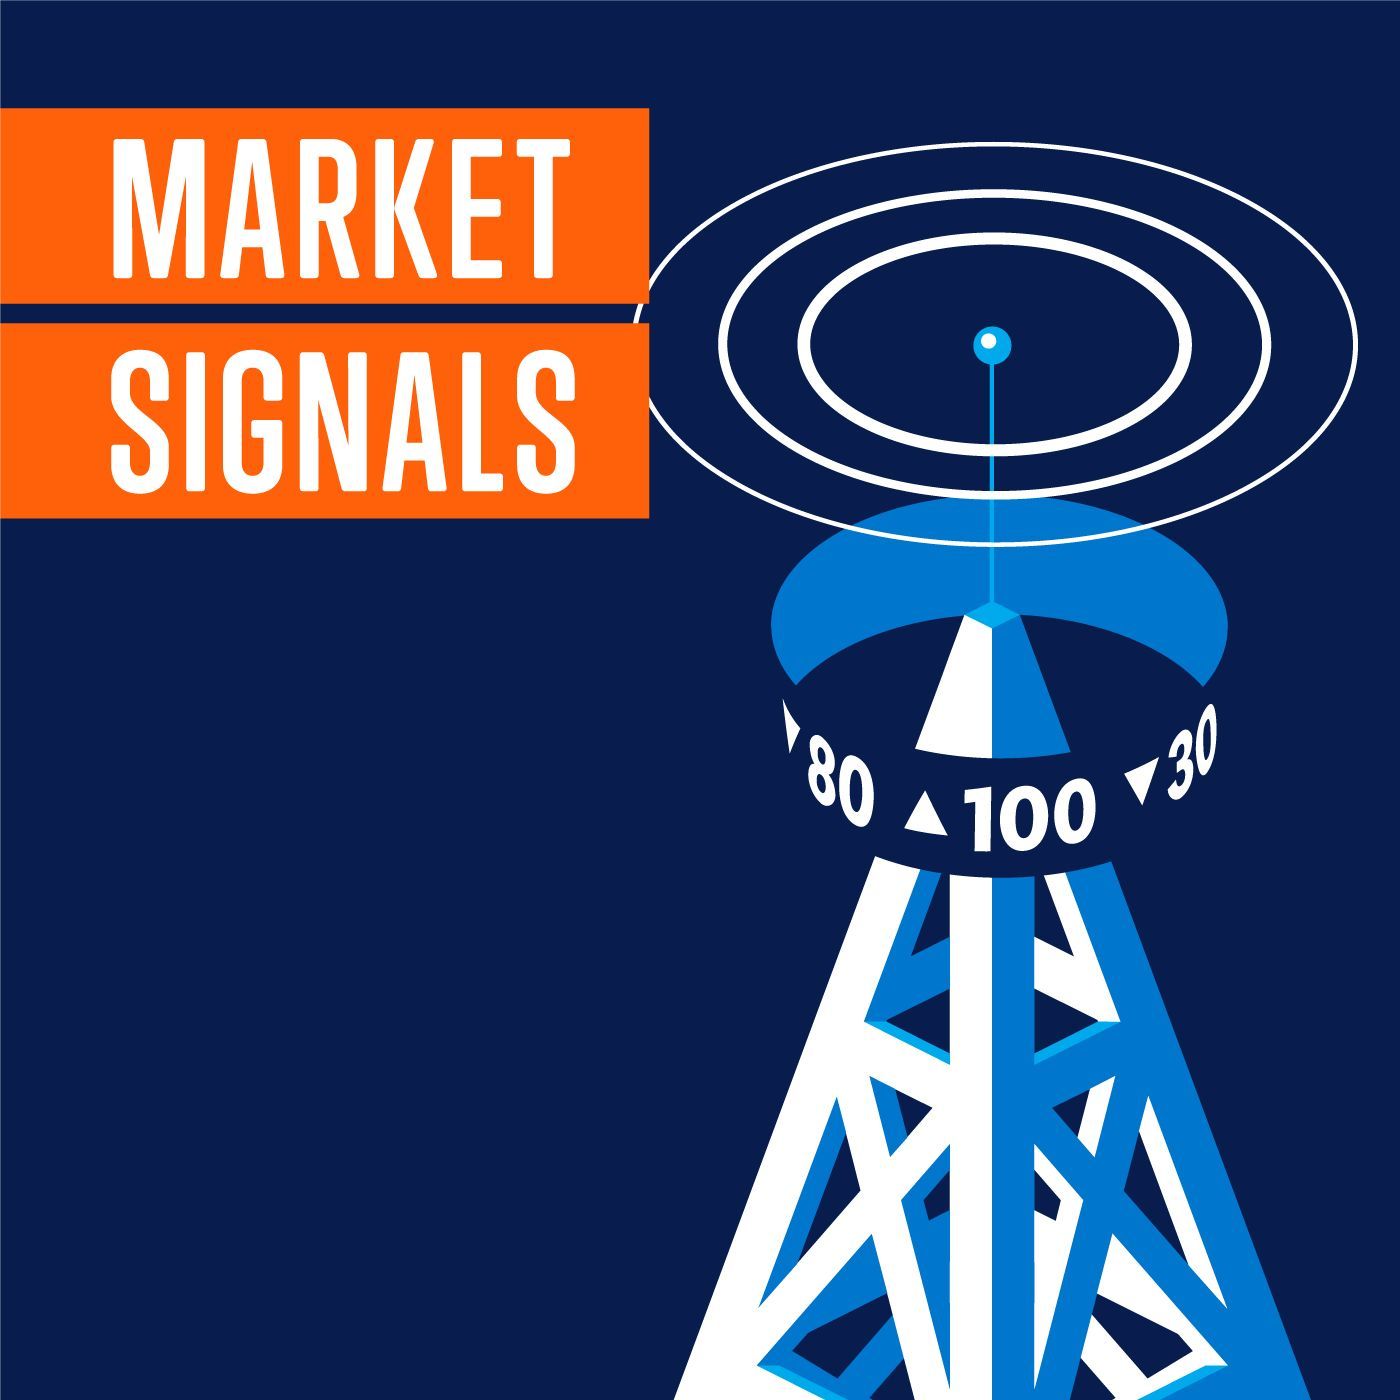 IPO Activity as a Market Signal | LPL Market Signals